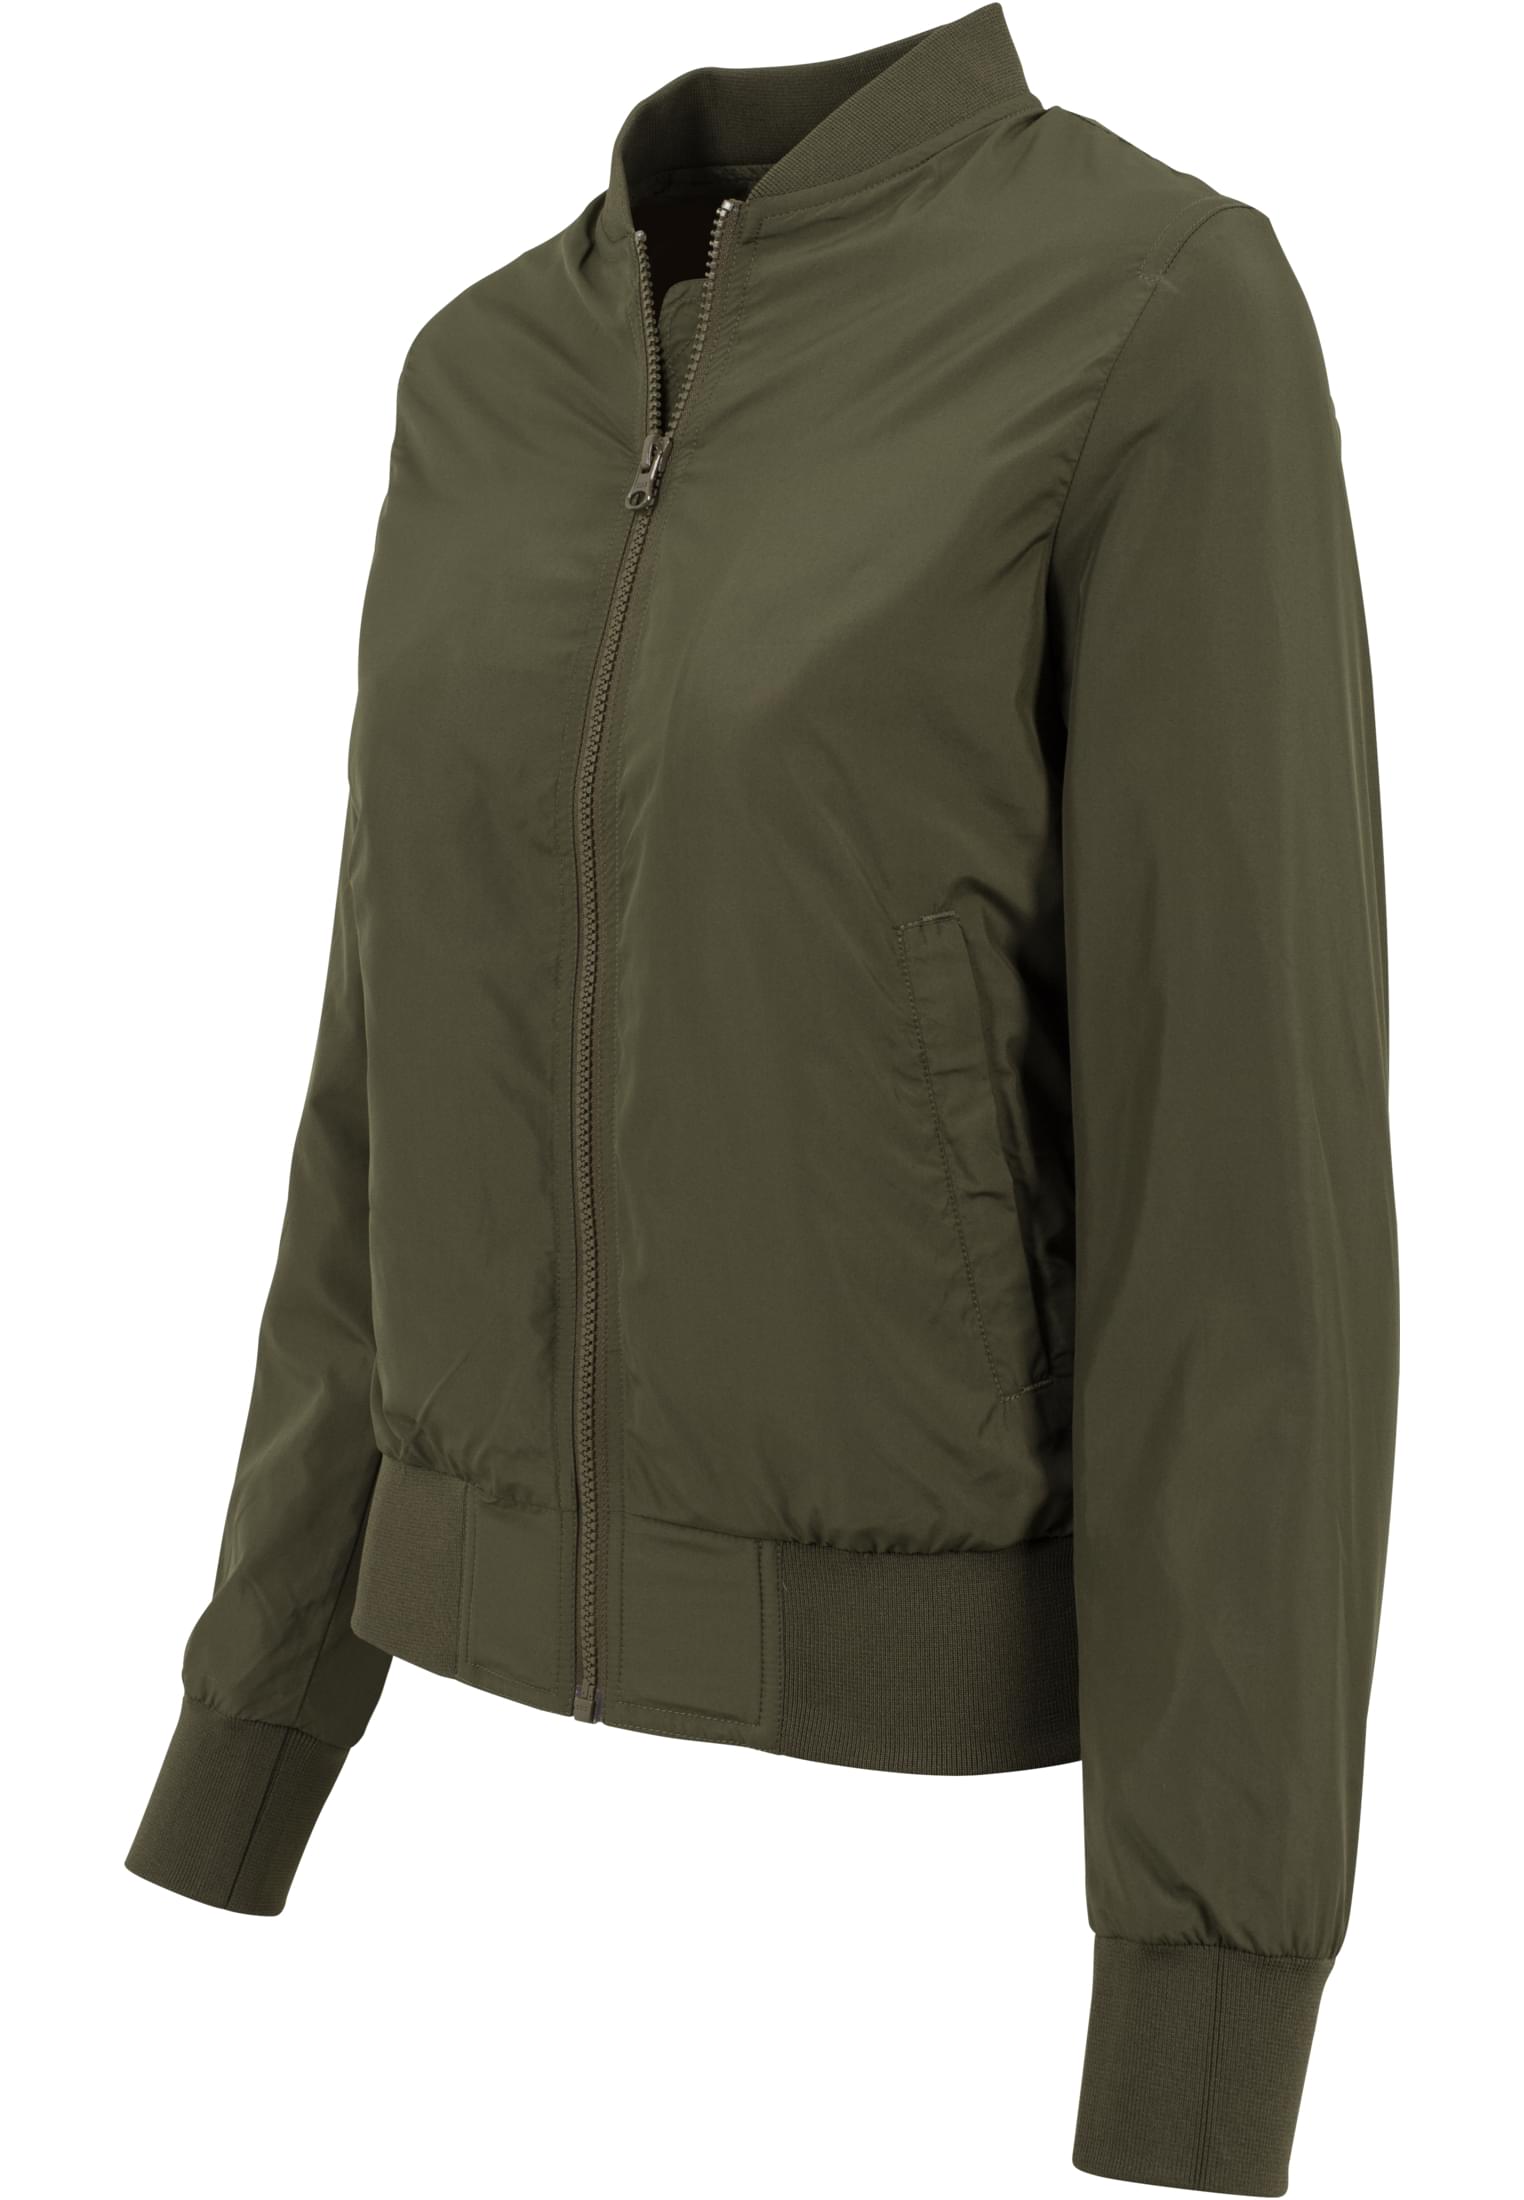 Frauen Ladies Light Bomber Jacket in Farbe dark olive